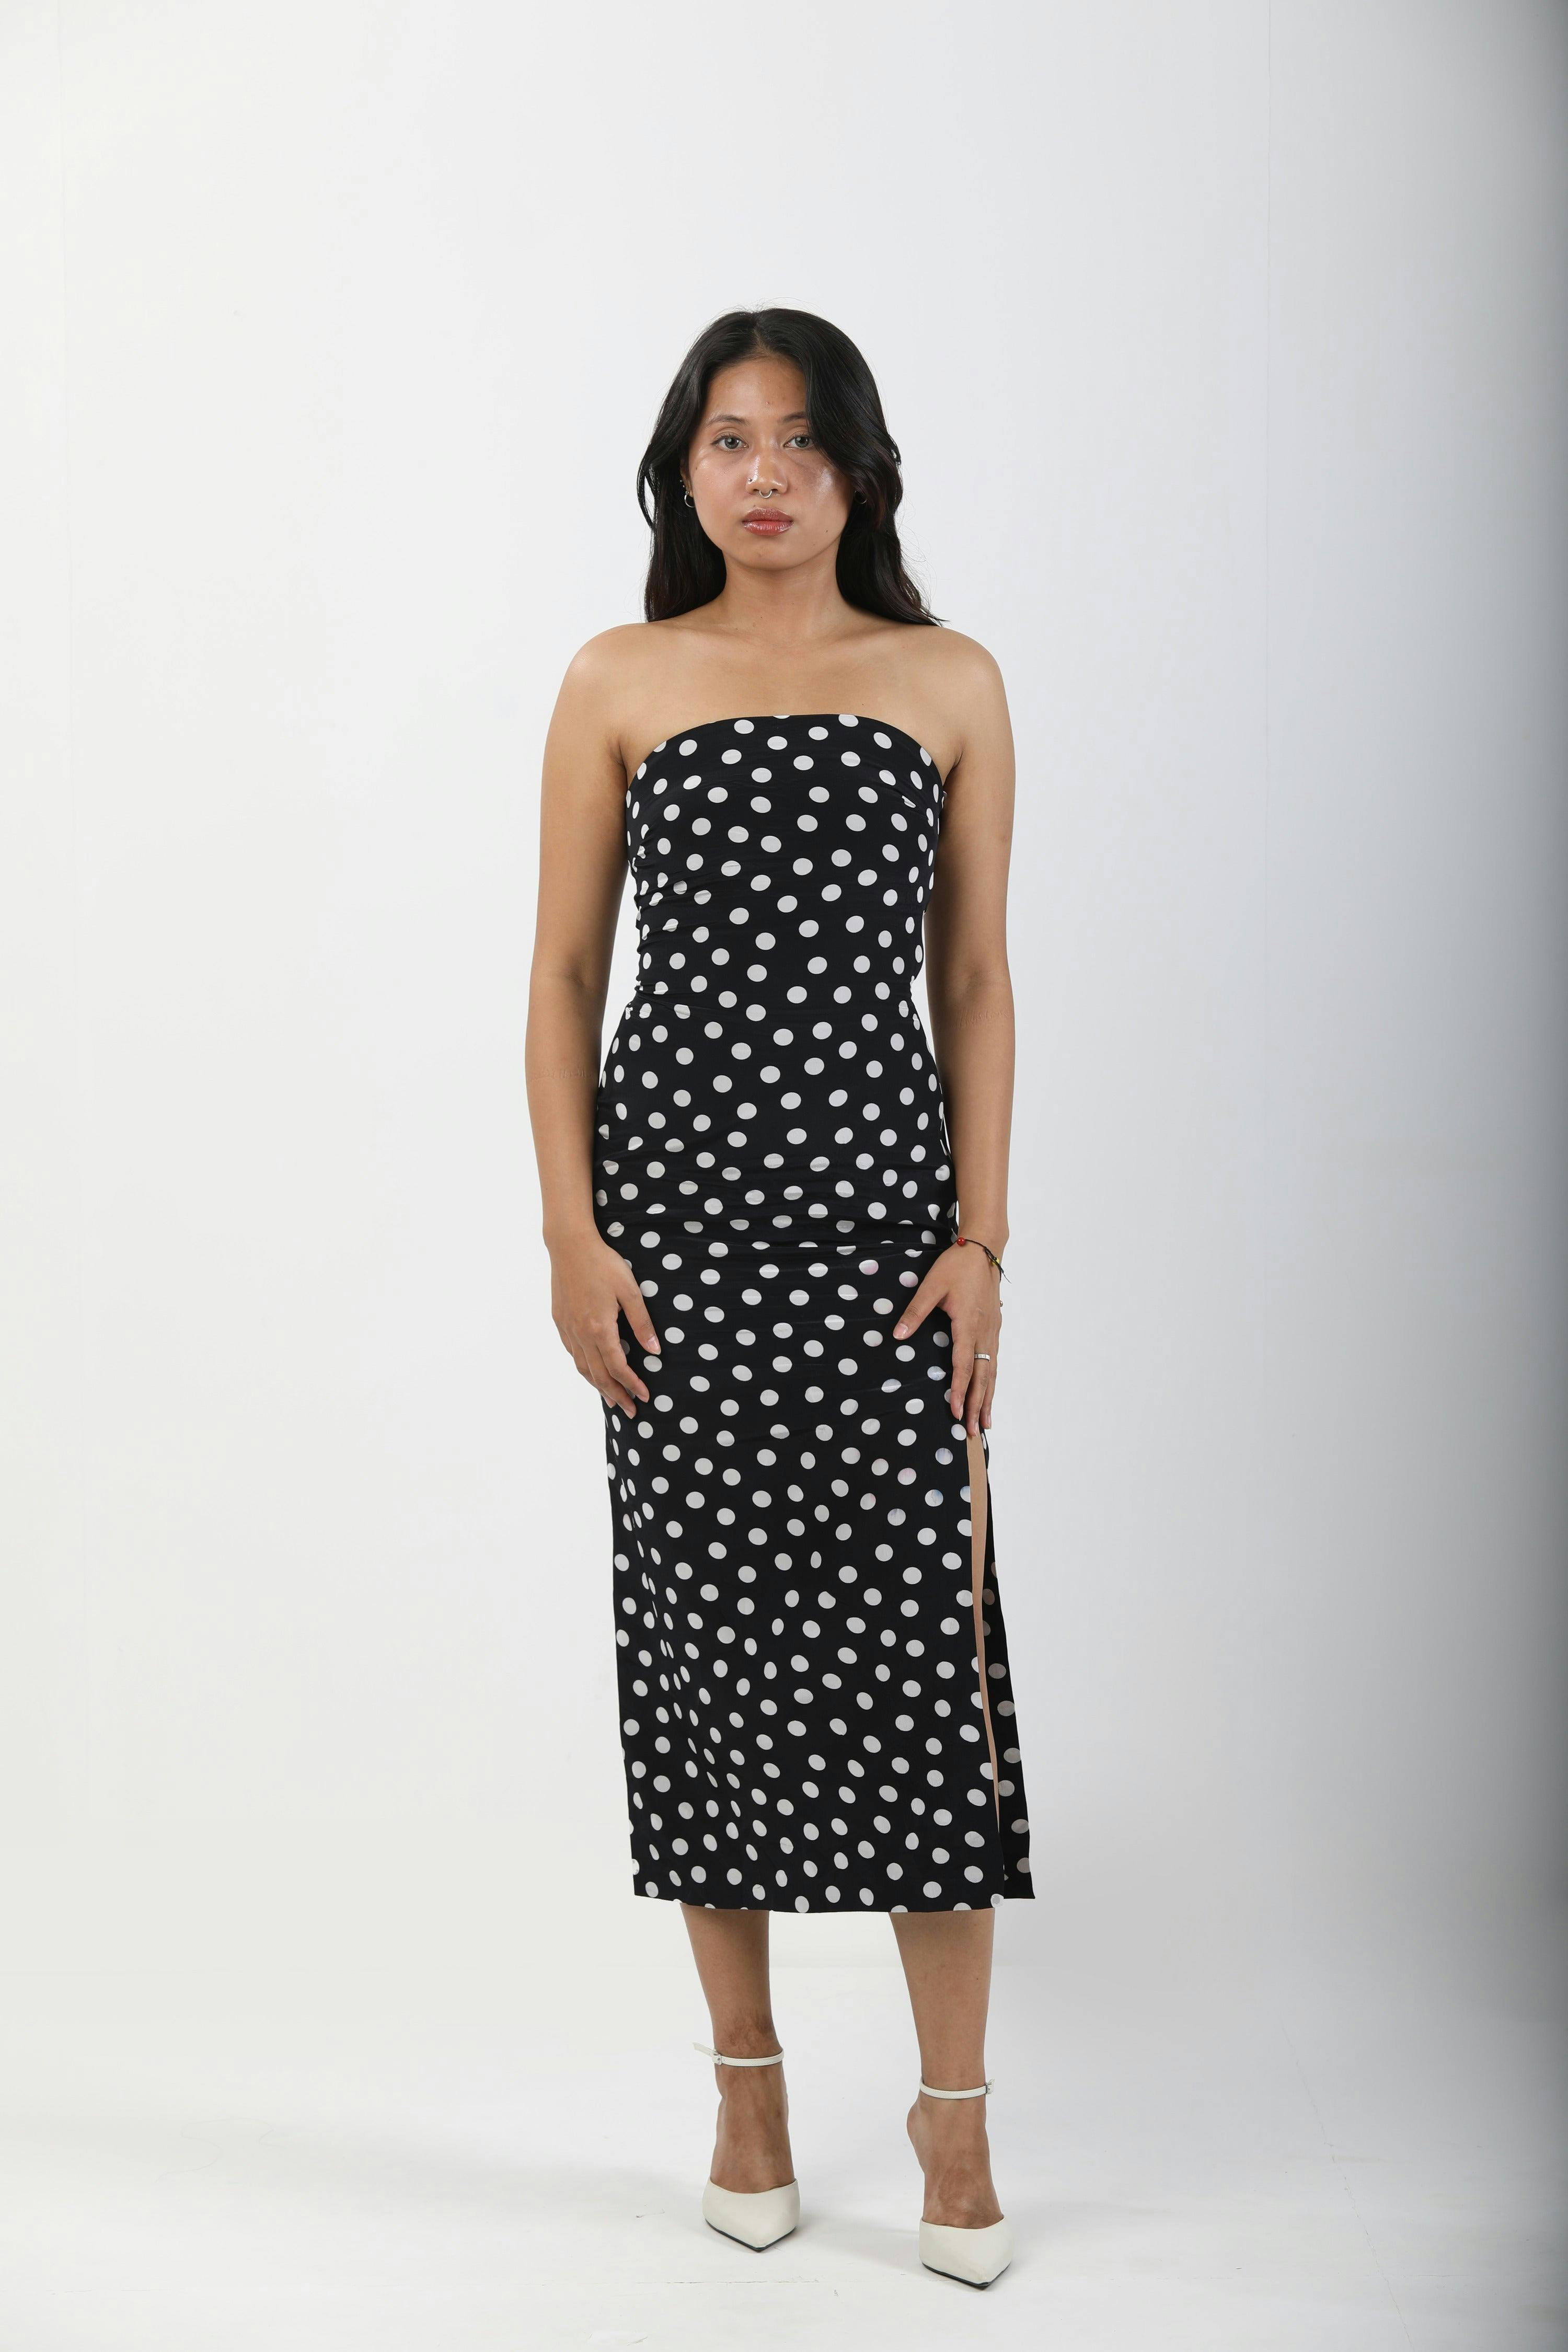 Convertible Cinching Tube Dress - Noir Dot, a product by izsi